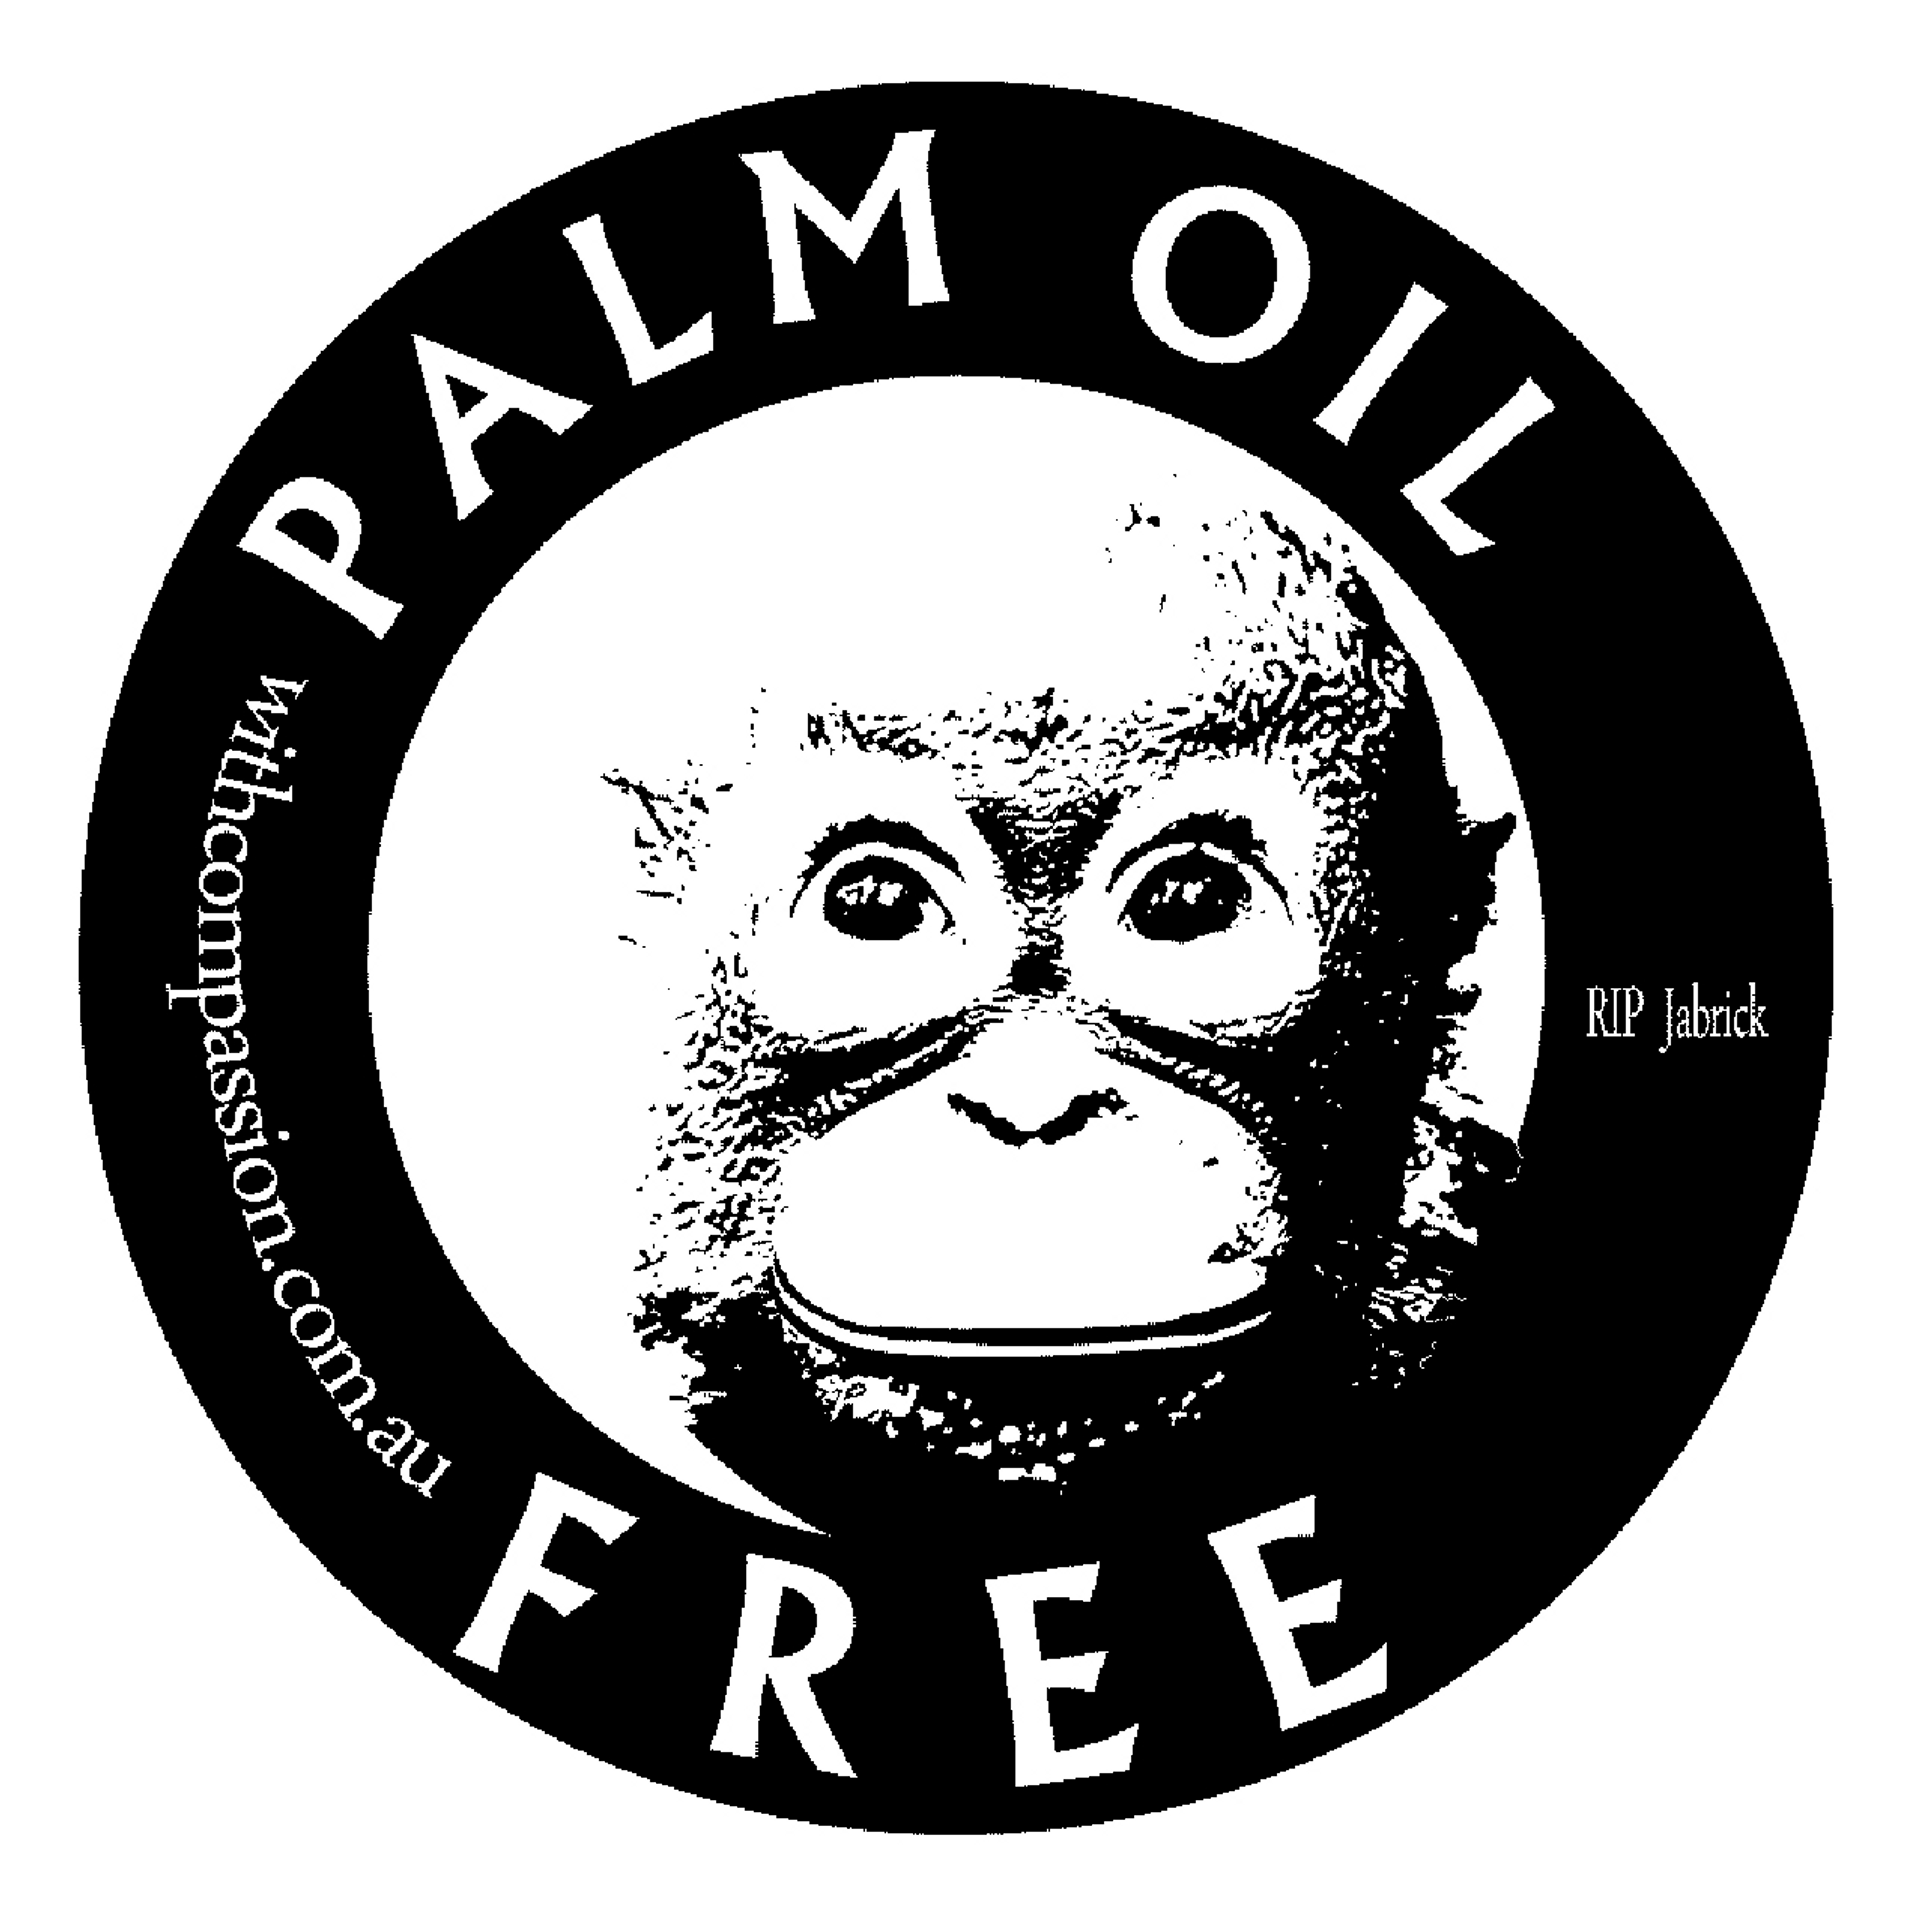 International Palm Oil Free Certification Accreditation Programme